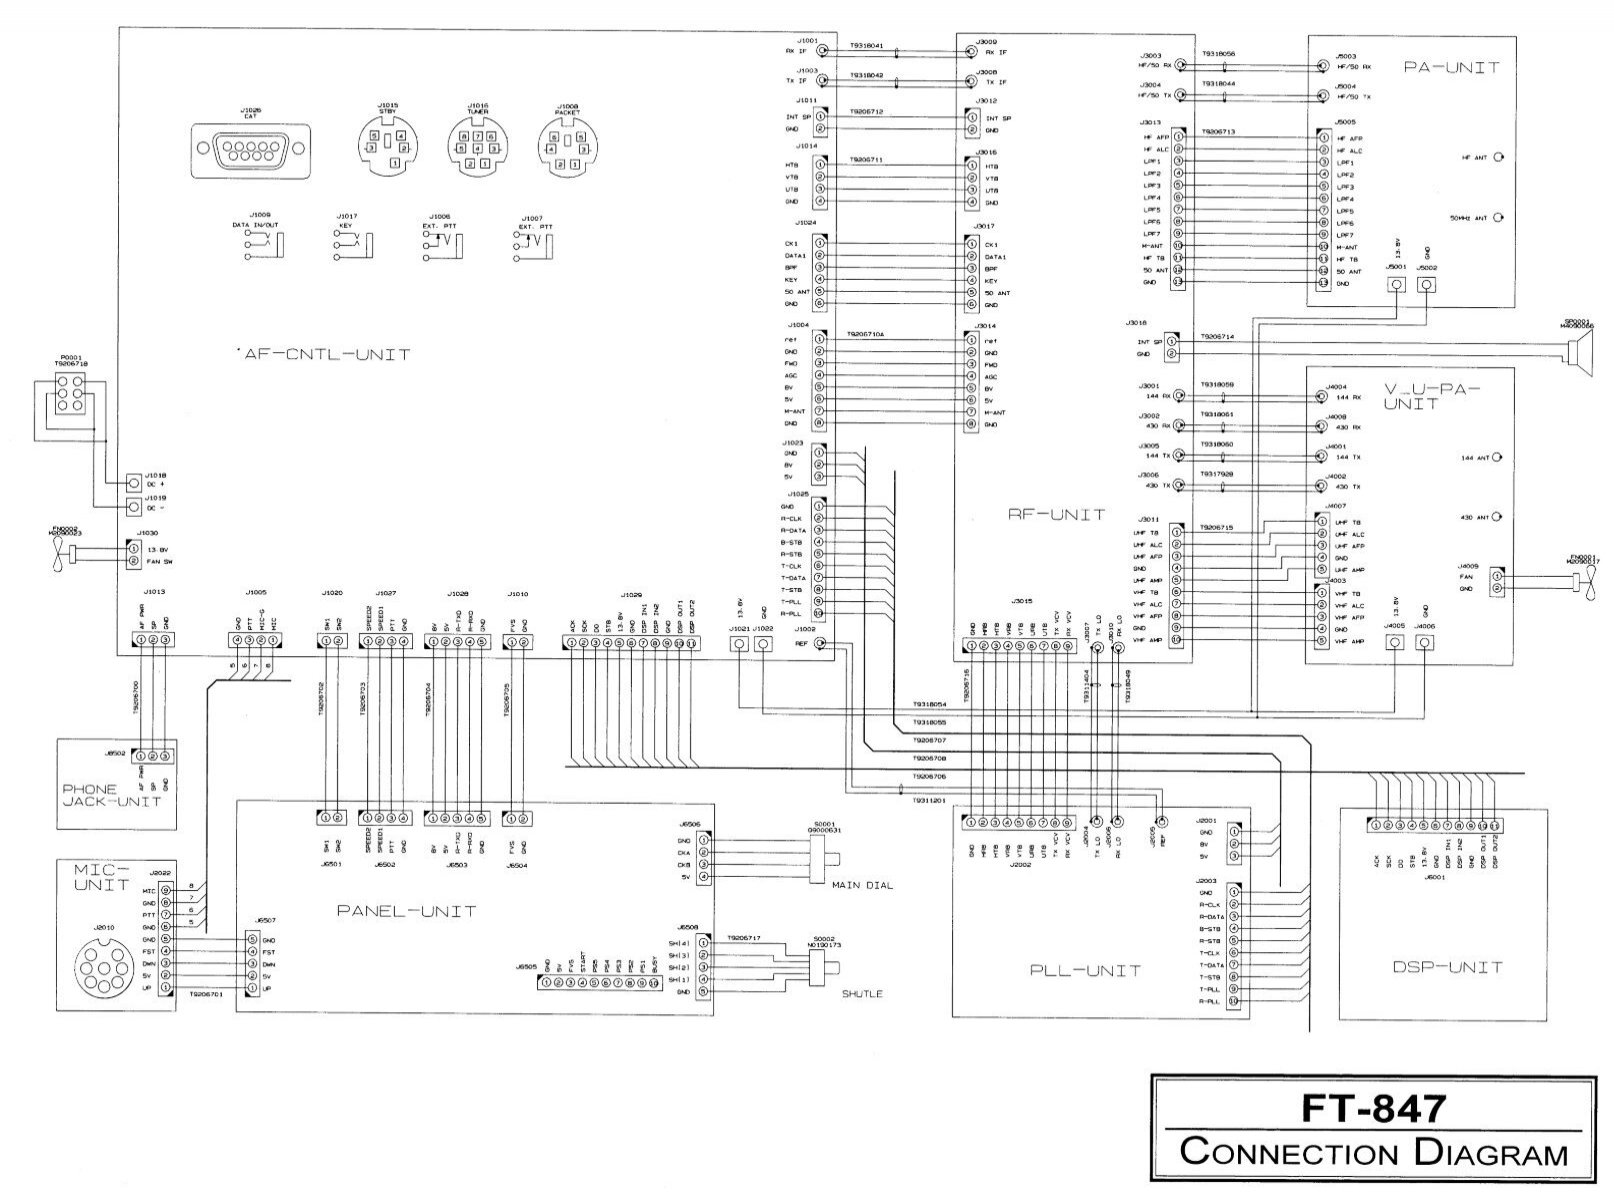 YAESU - FT-920 Circuit diagram - IW2NMX